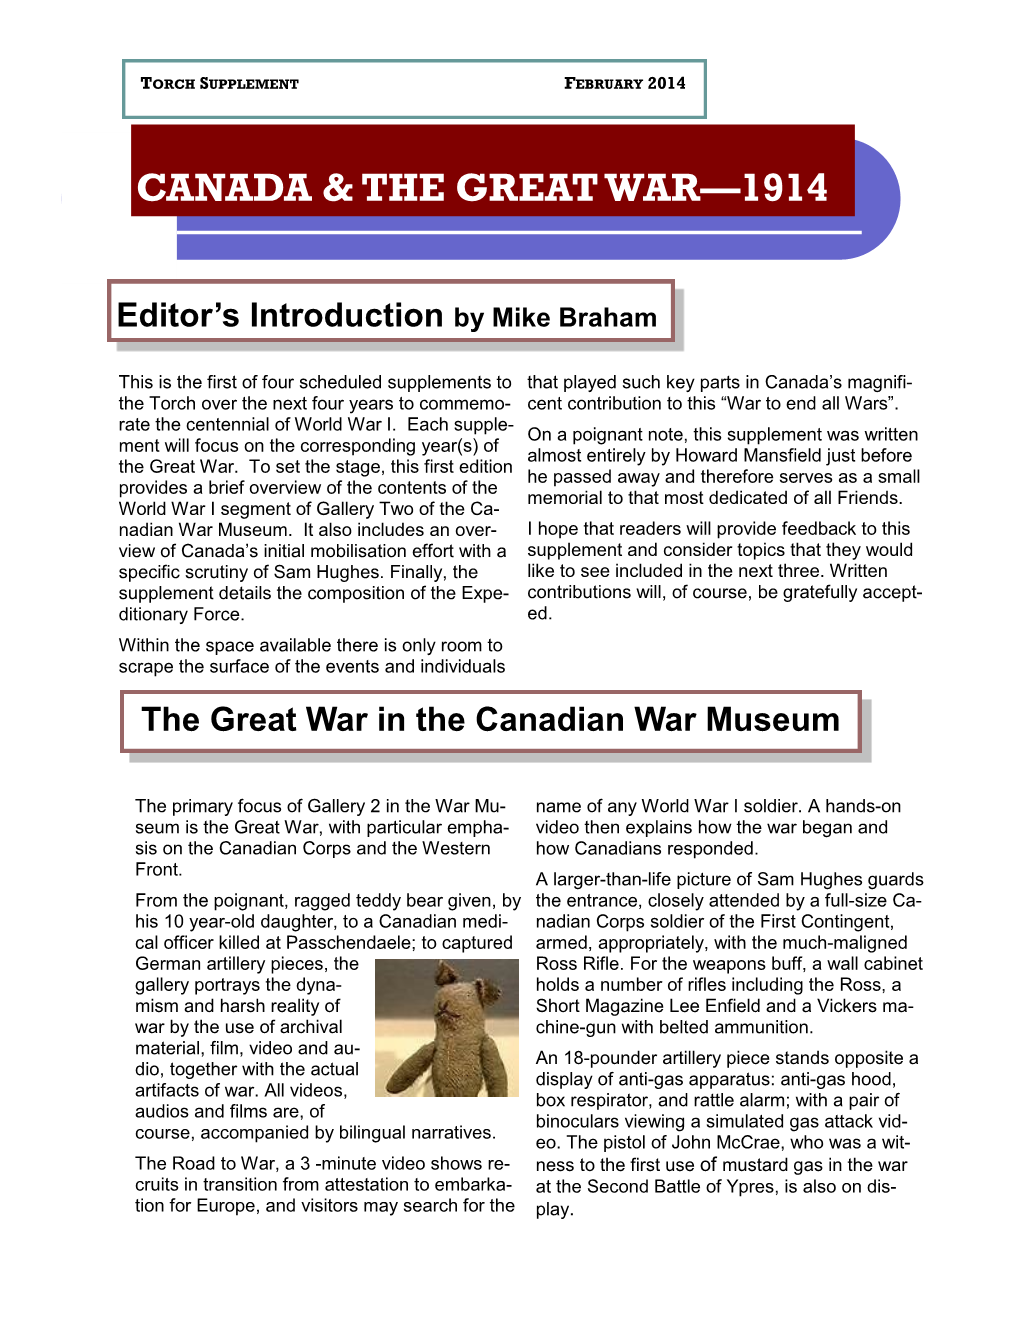 Canada & the Great War—1914